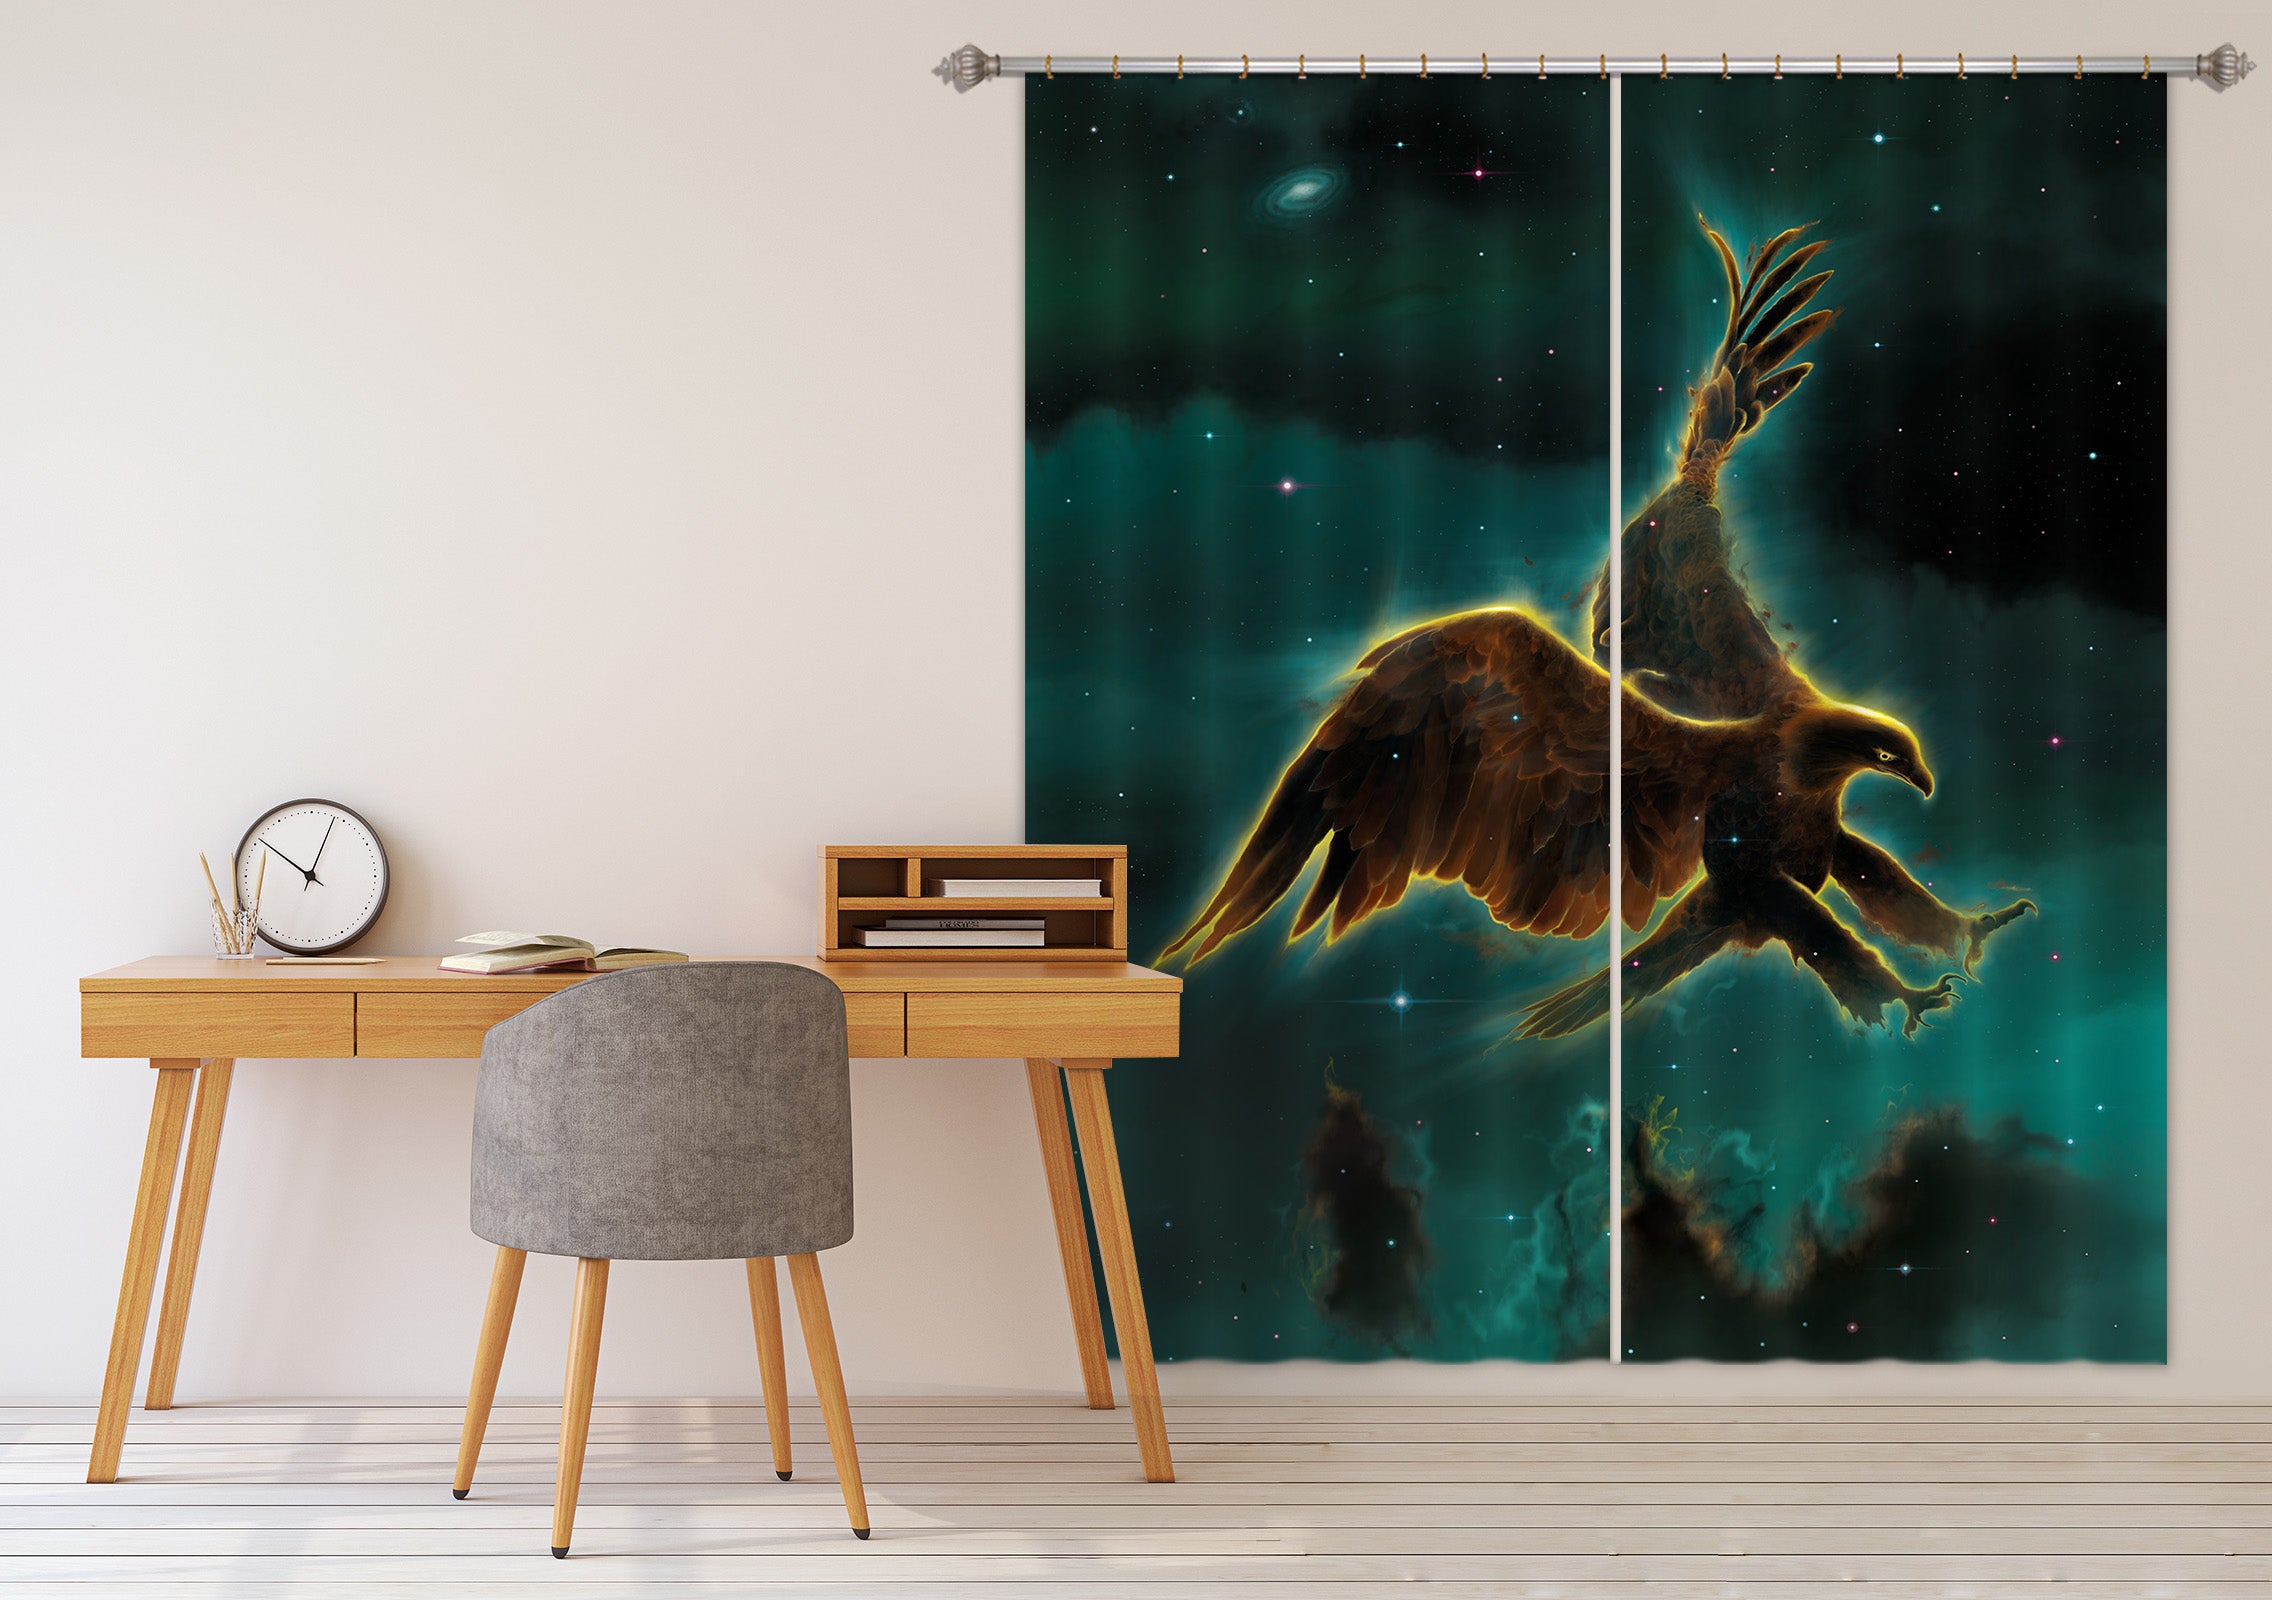 3D Eagle Galaxy 035 Vincent Hie Curtain Curtains Drapes